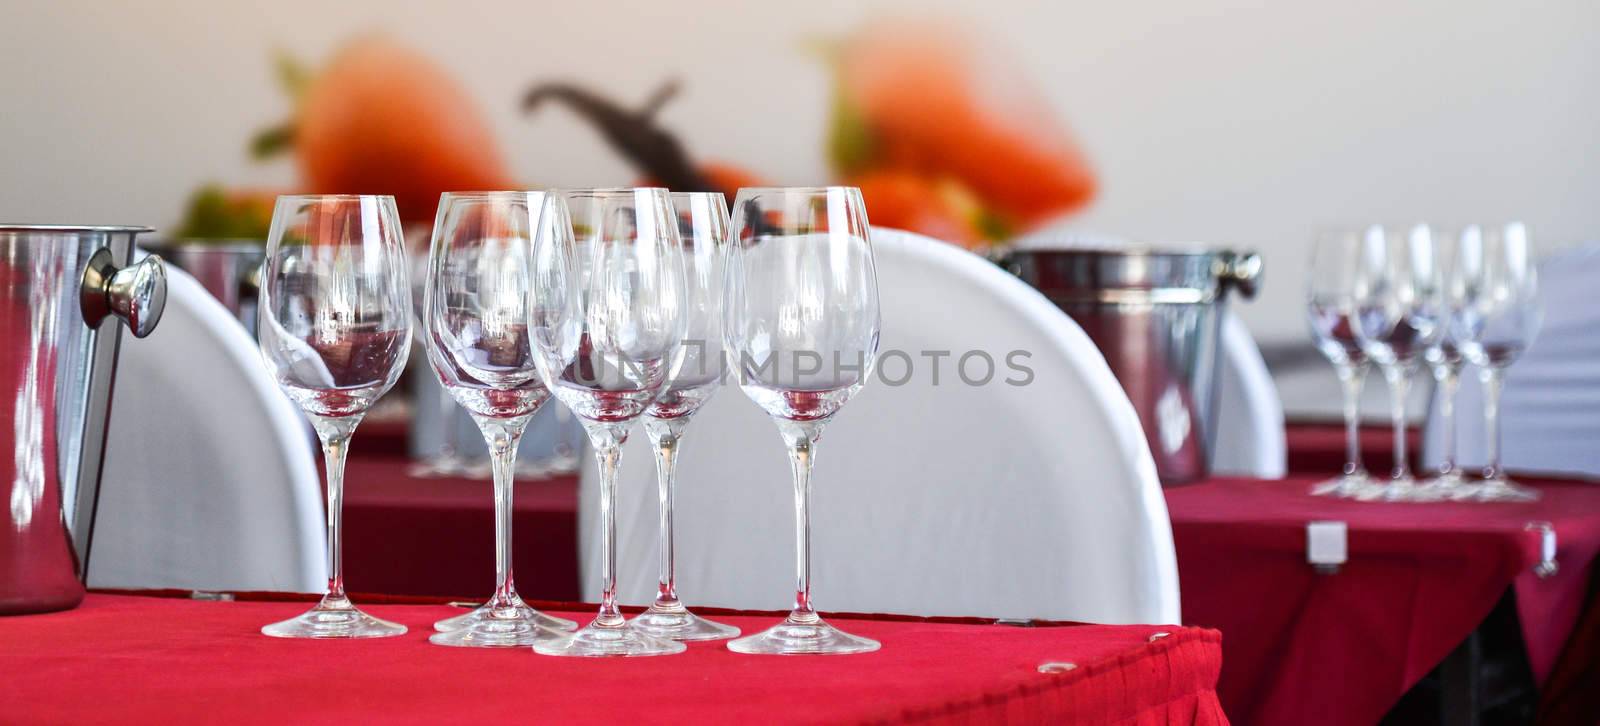 wine glasses by vlaru